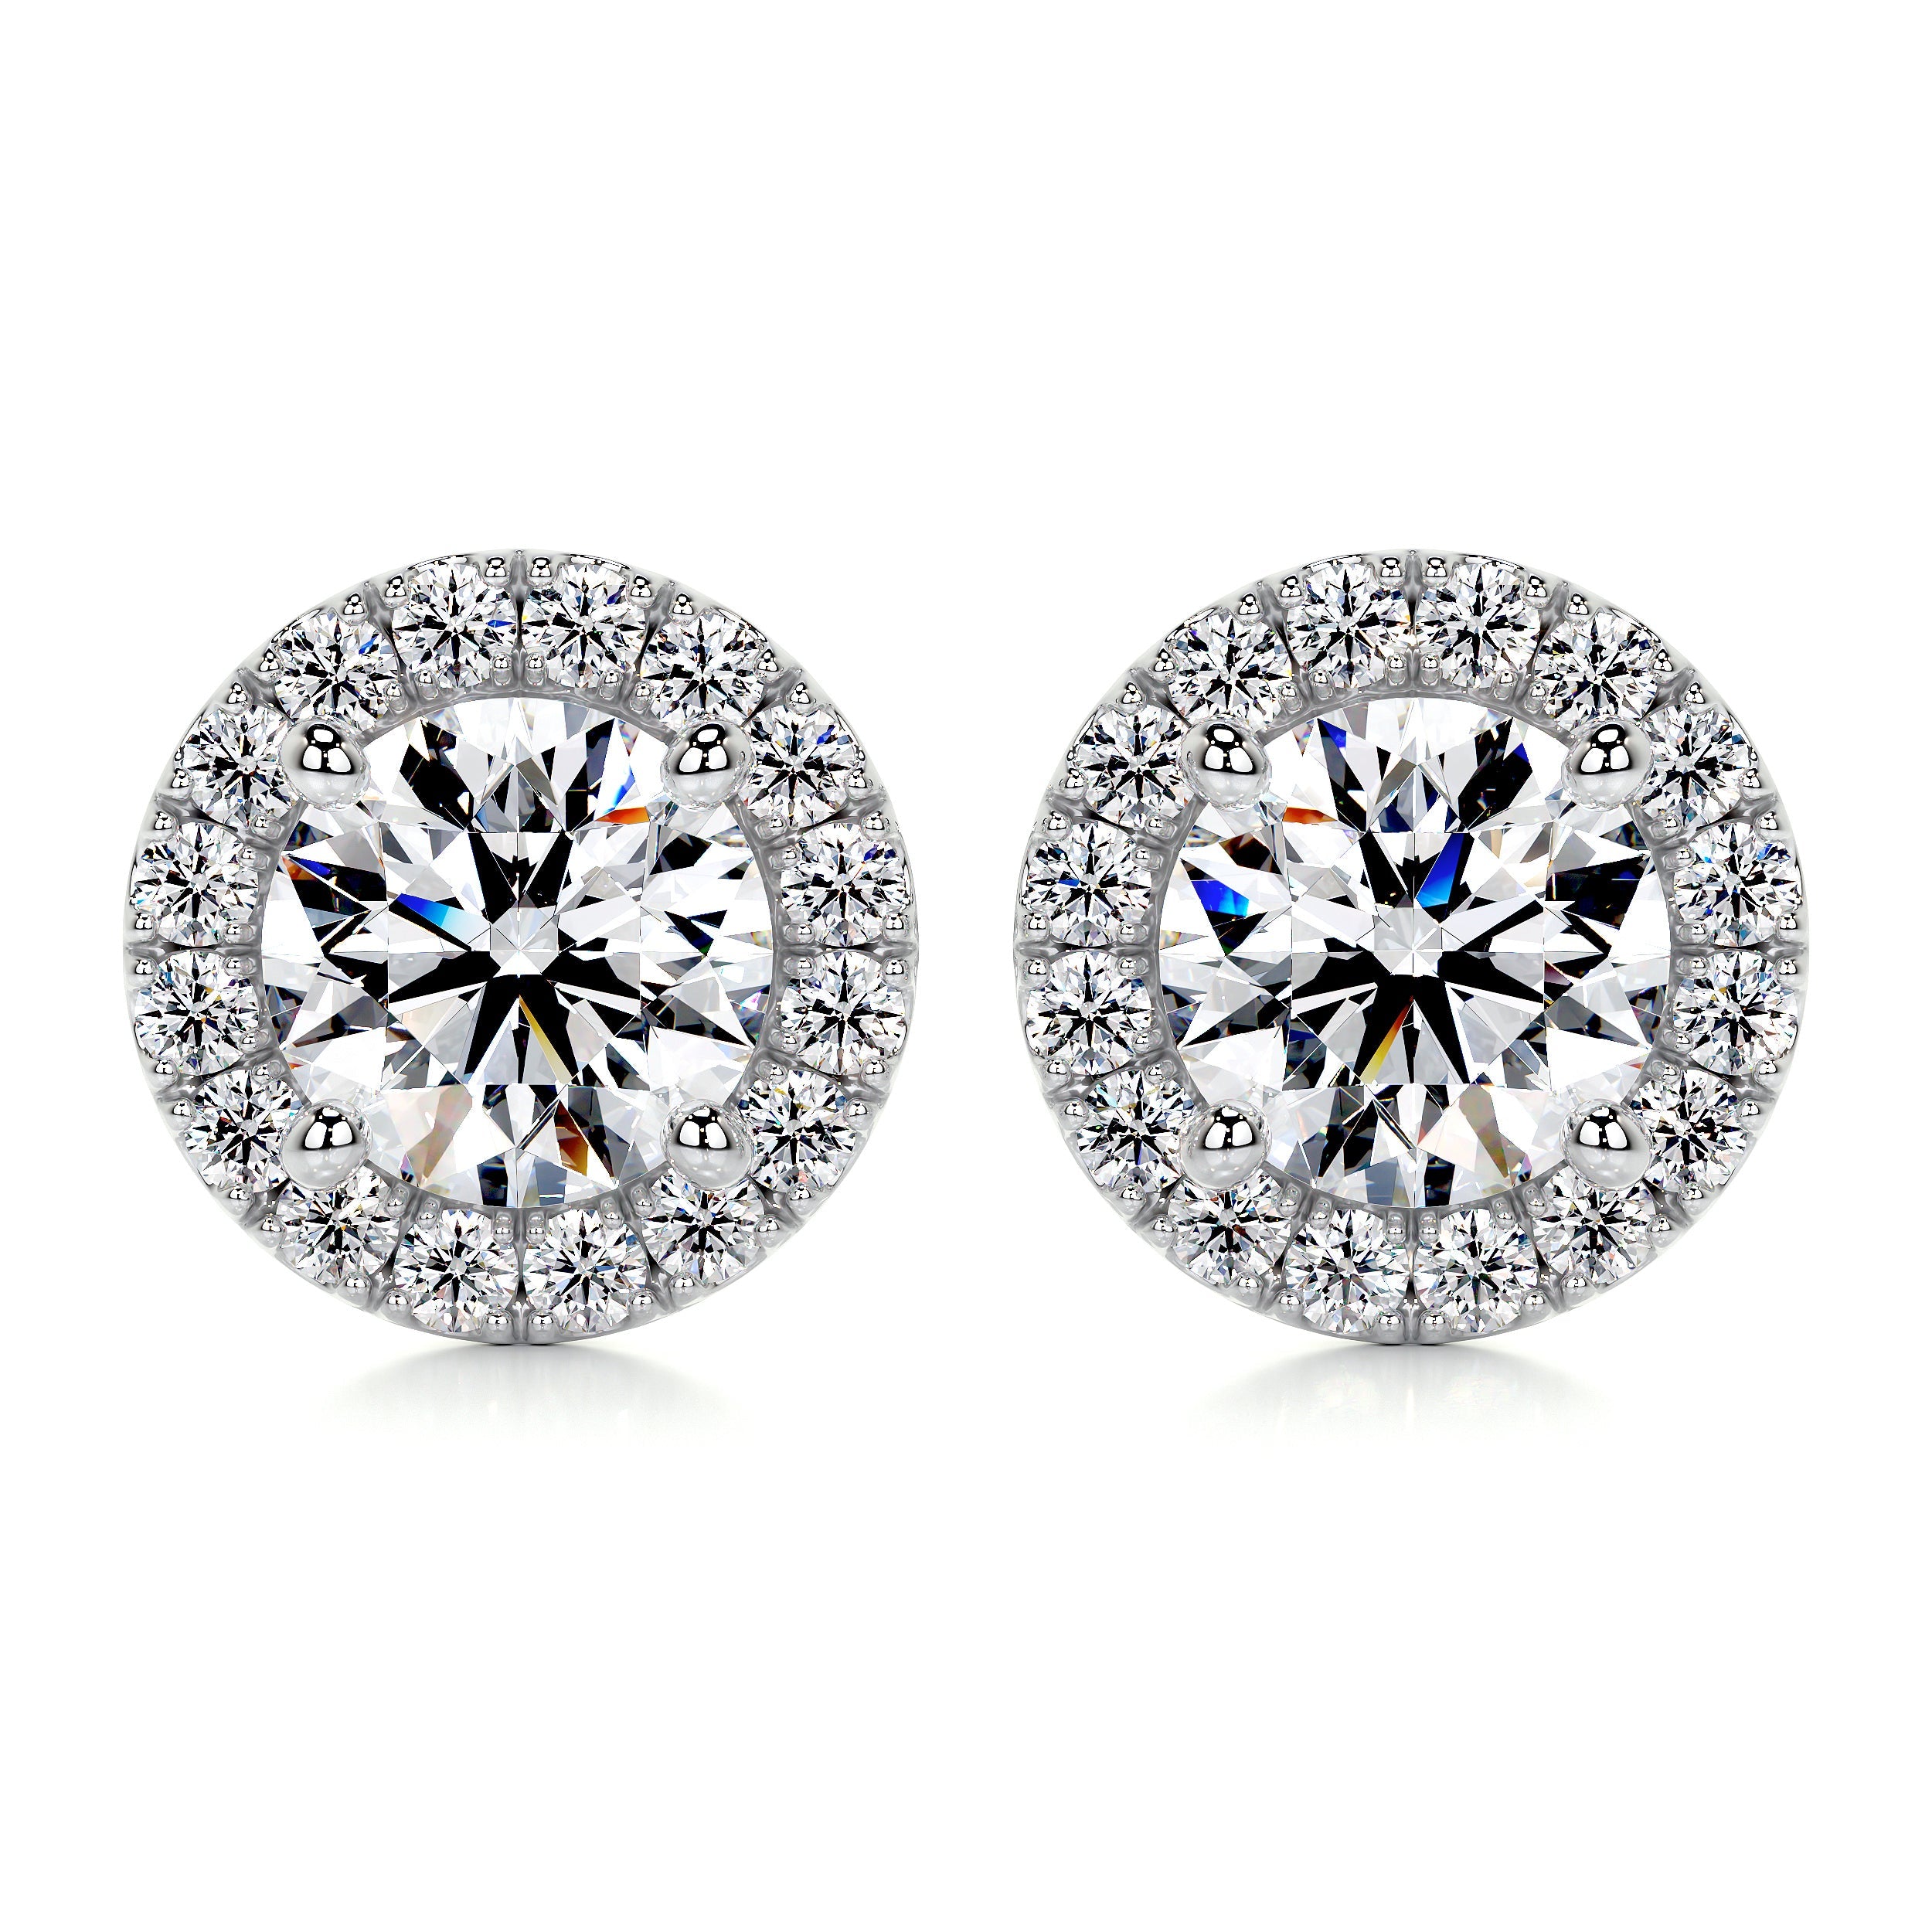 Erica Diamond Earrings   (1 Carat) -14K White Gold (RTS)